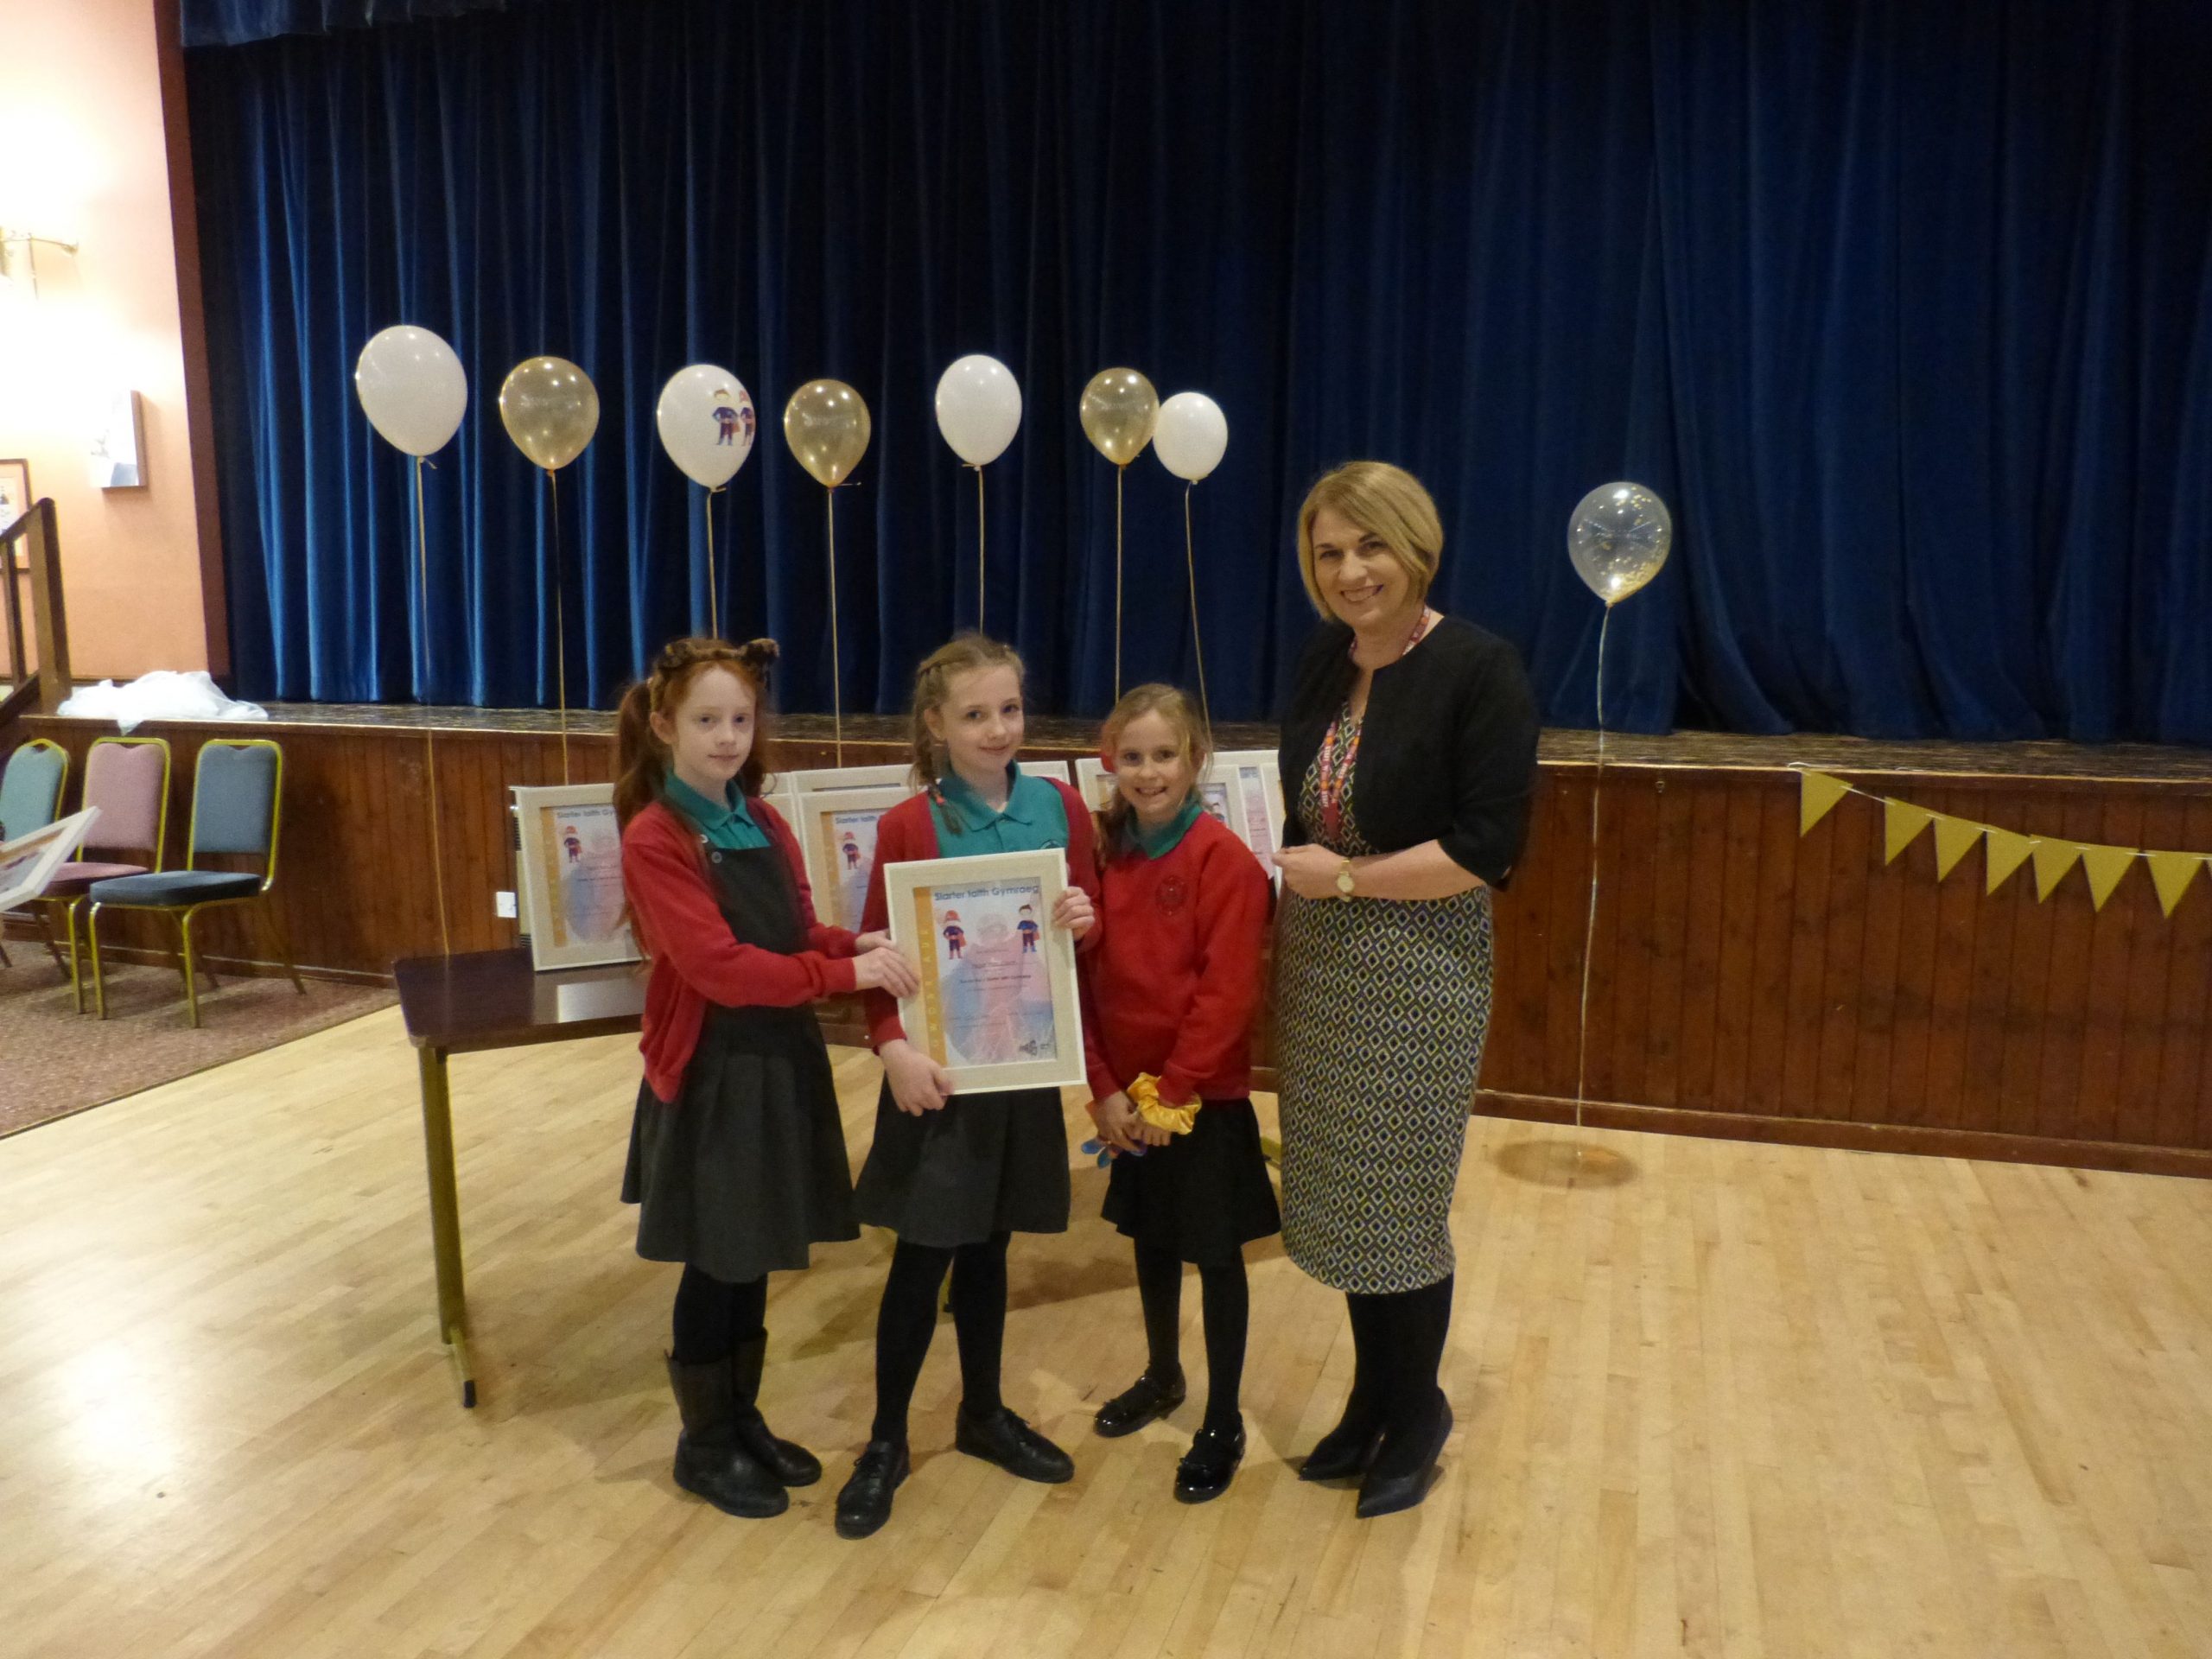 Siarter Iaith awards for Wrexham and Flintshire schools